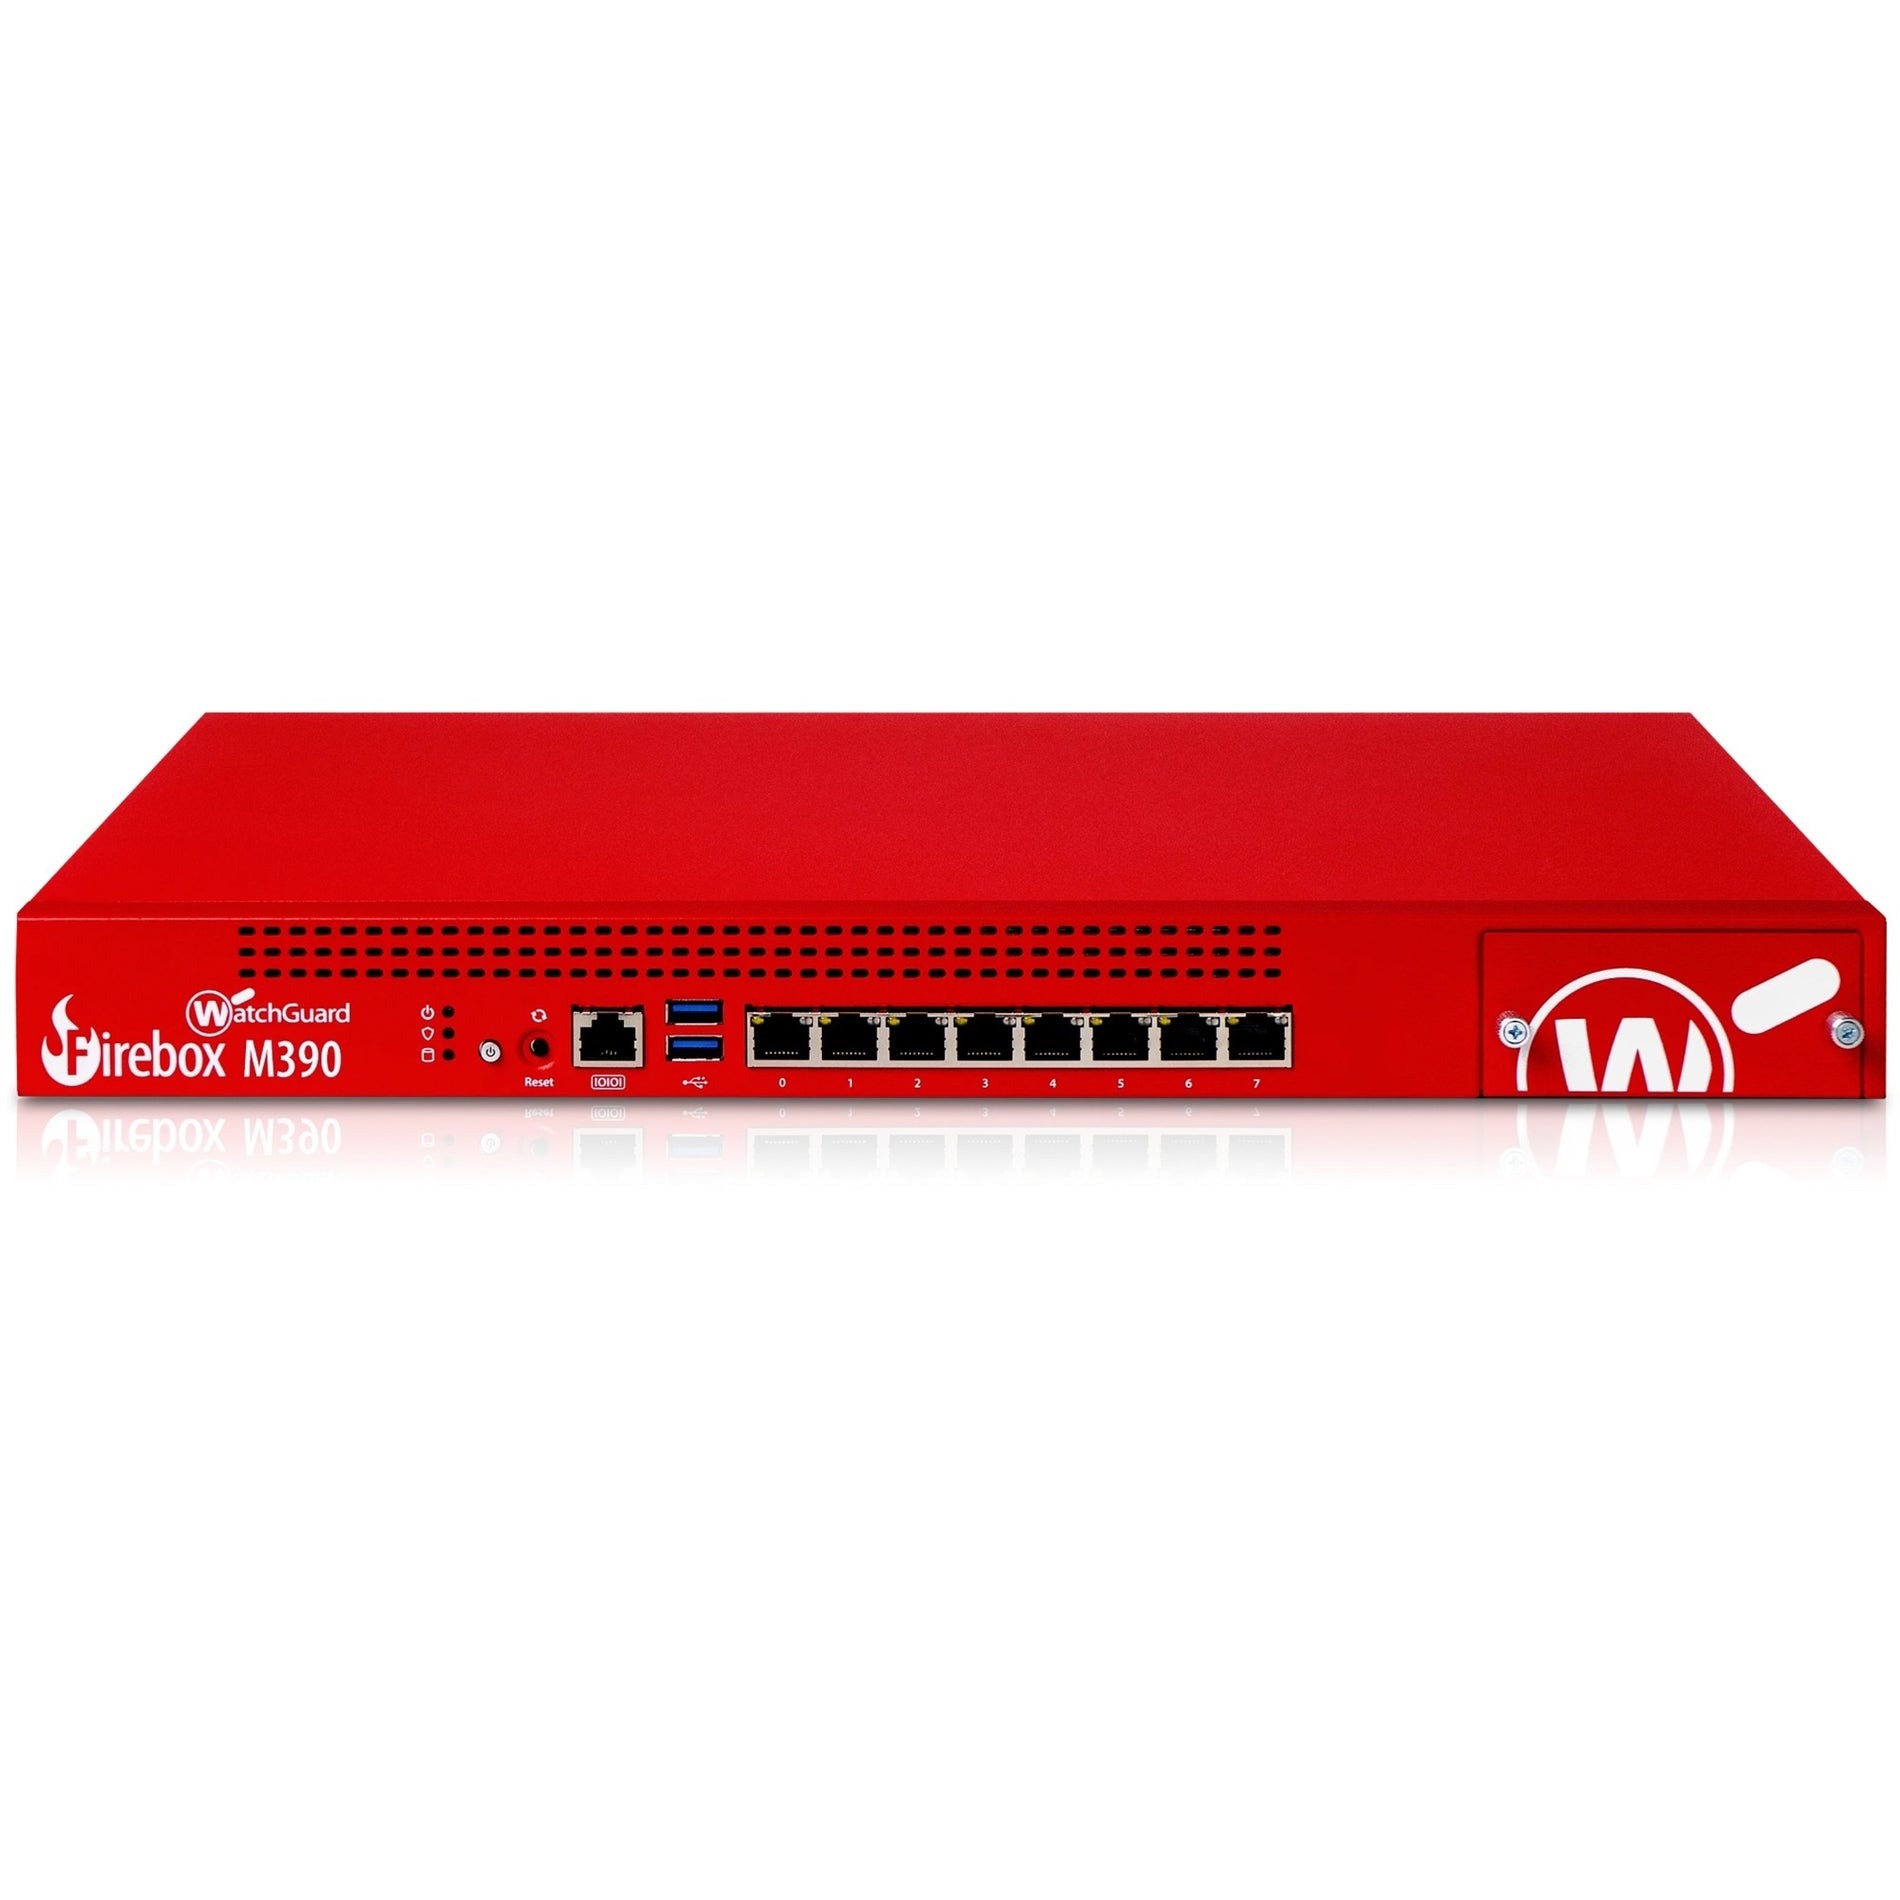 WatchGuard WGM39003300 Firebox M390 Network Security/Firewall Appliance, 8 Ports, Gigabit Ethernet